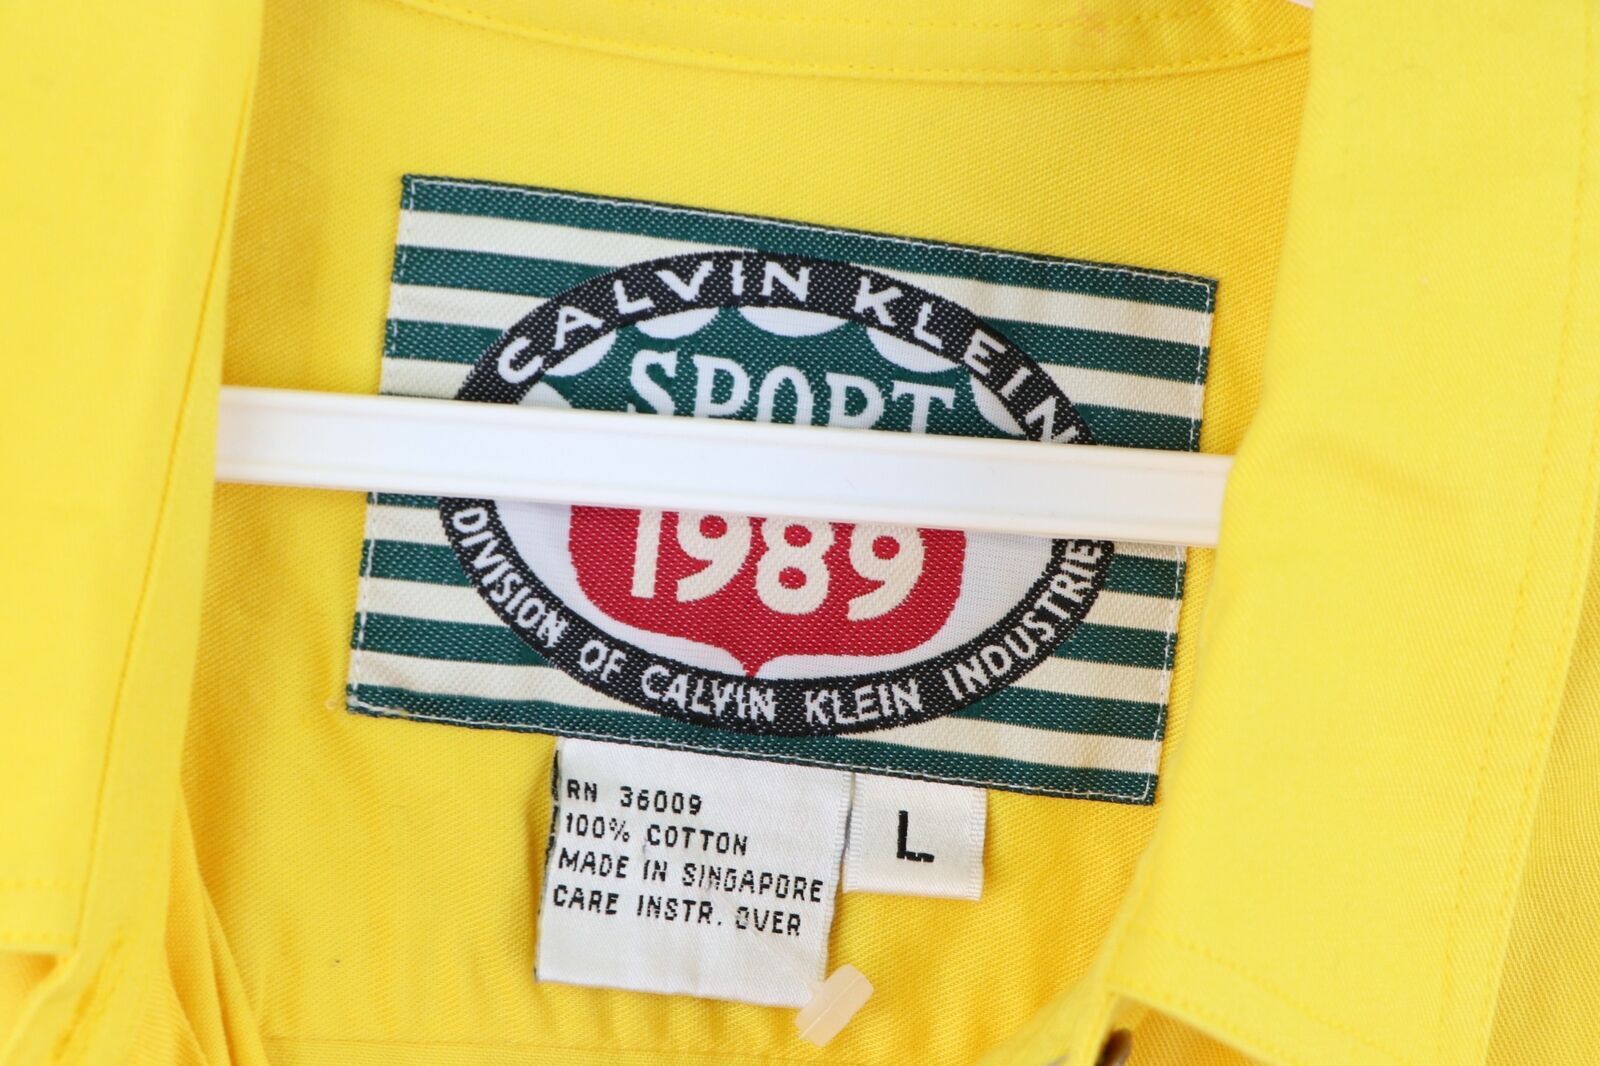 Calvin Klein NOS Vintage 80s Calvin Klein Sport Pocket Button Shirt Size US M / EU 48-50 / 2 - 3 Thumbnail